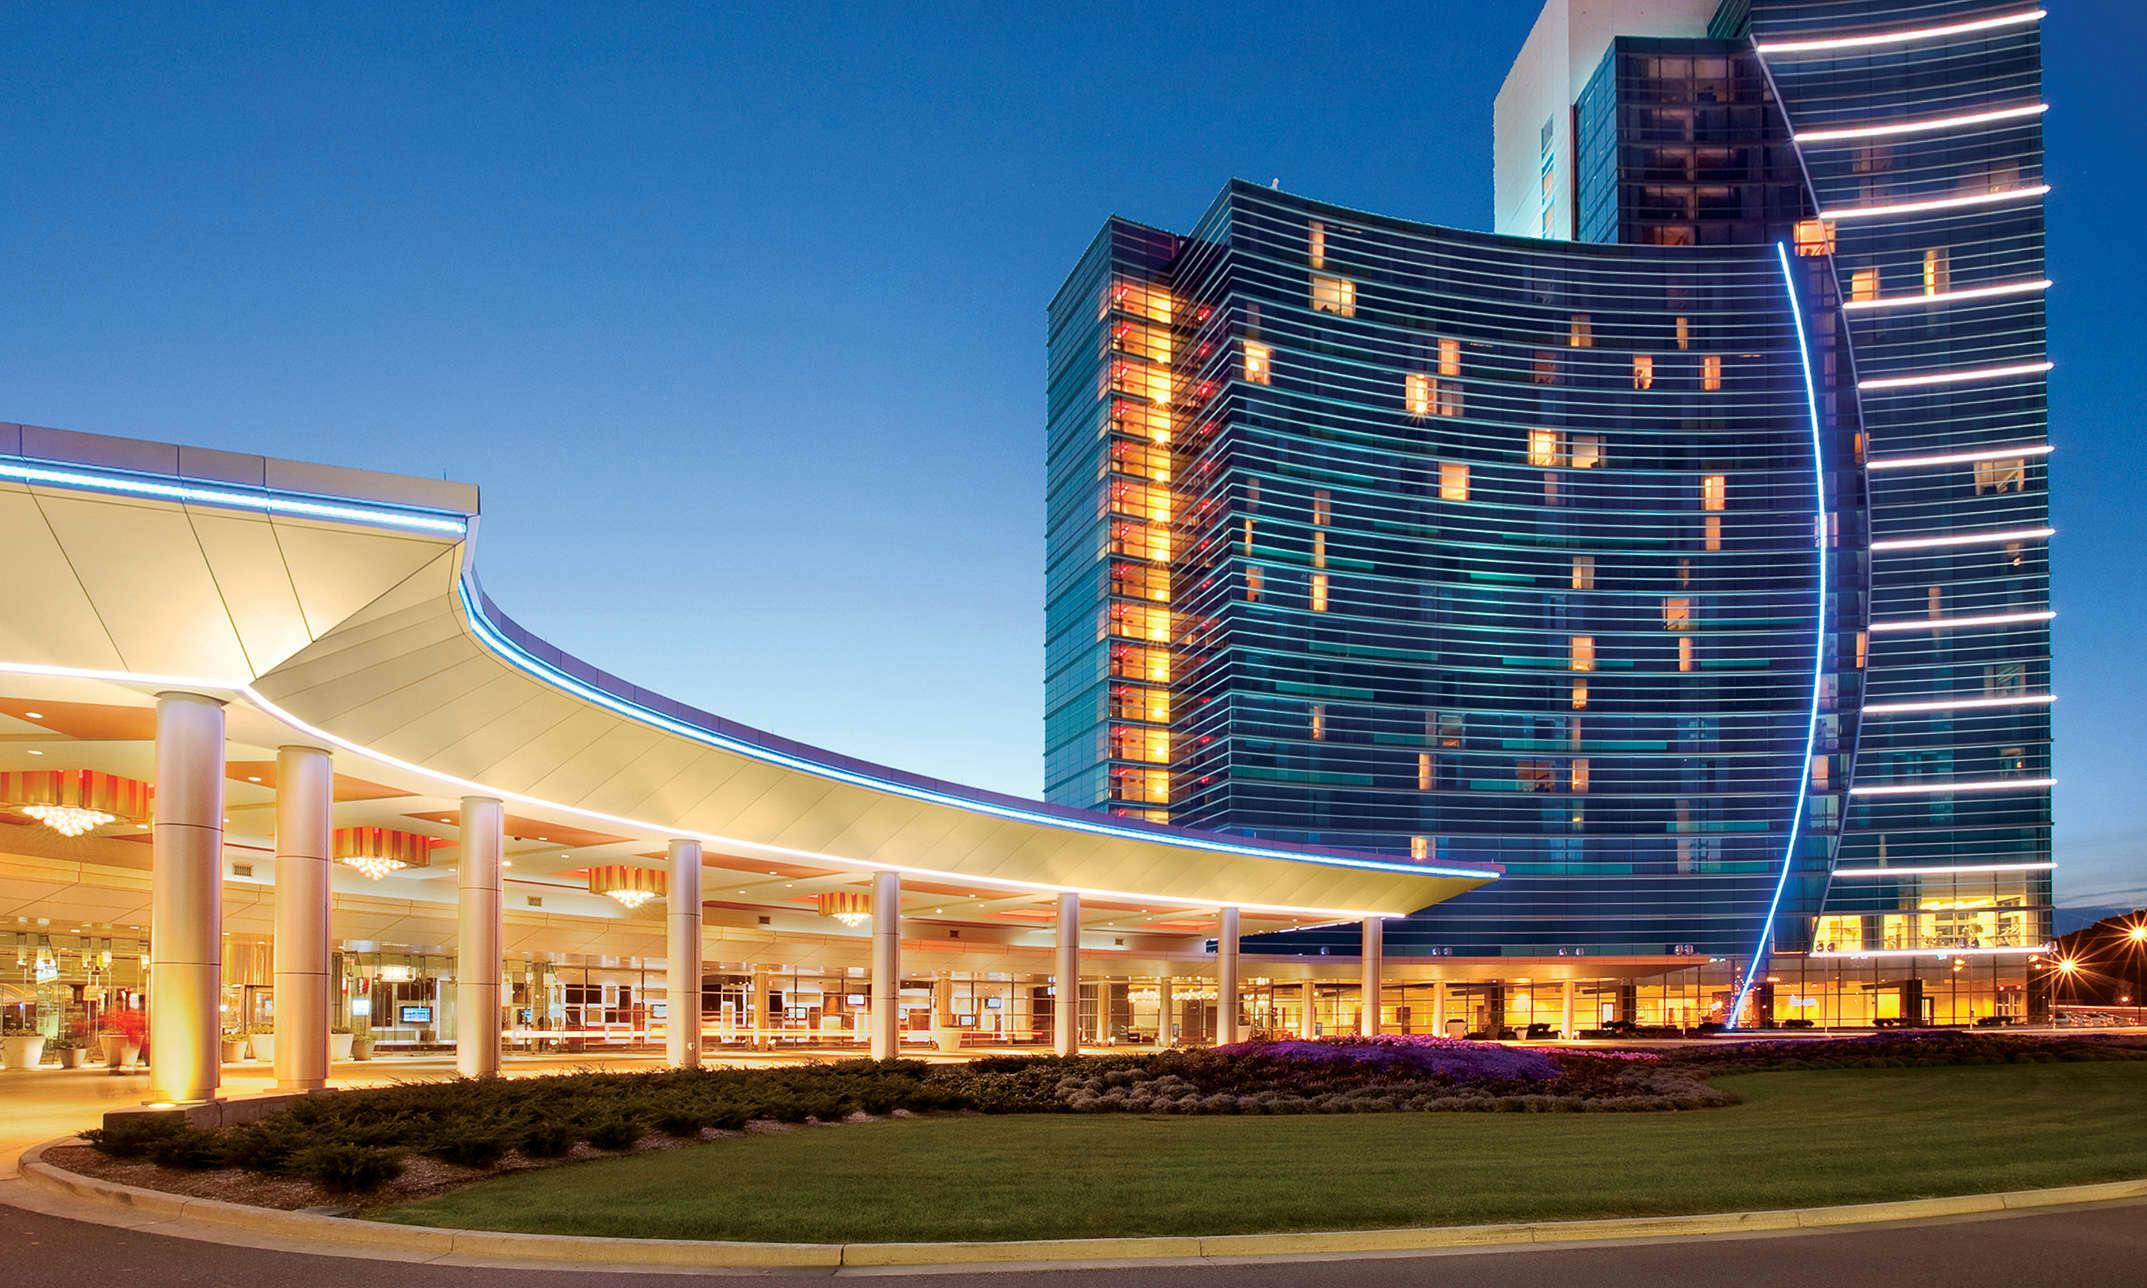 blue chip casino and resort